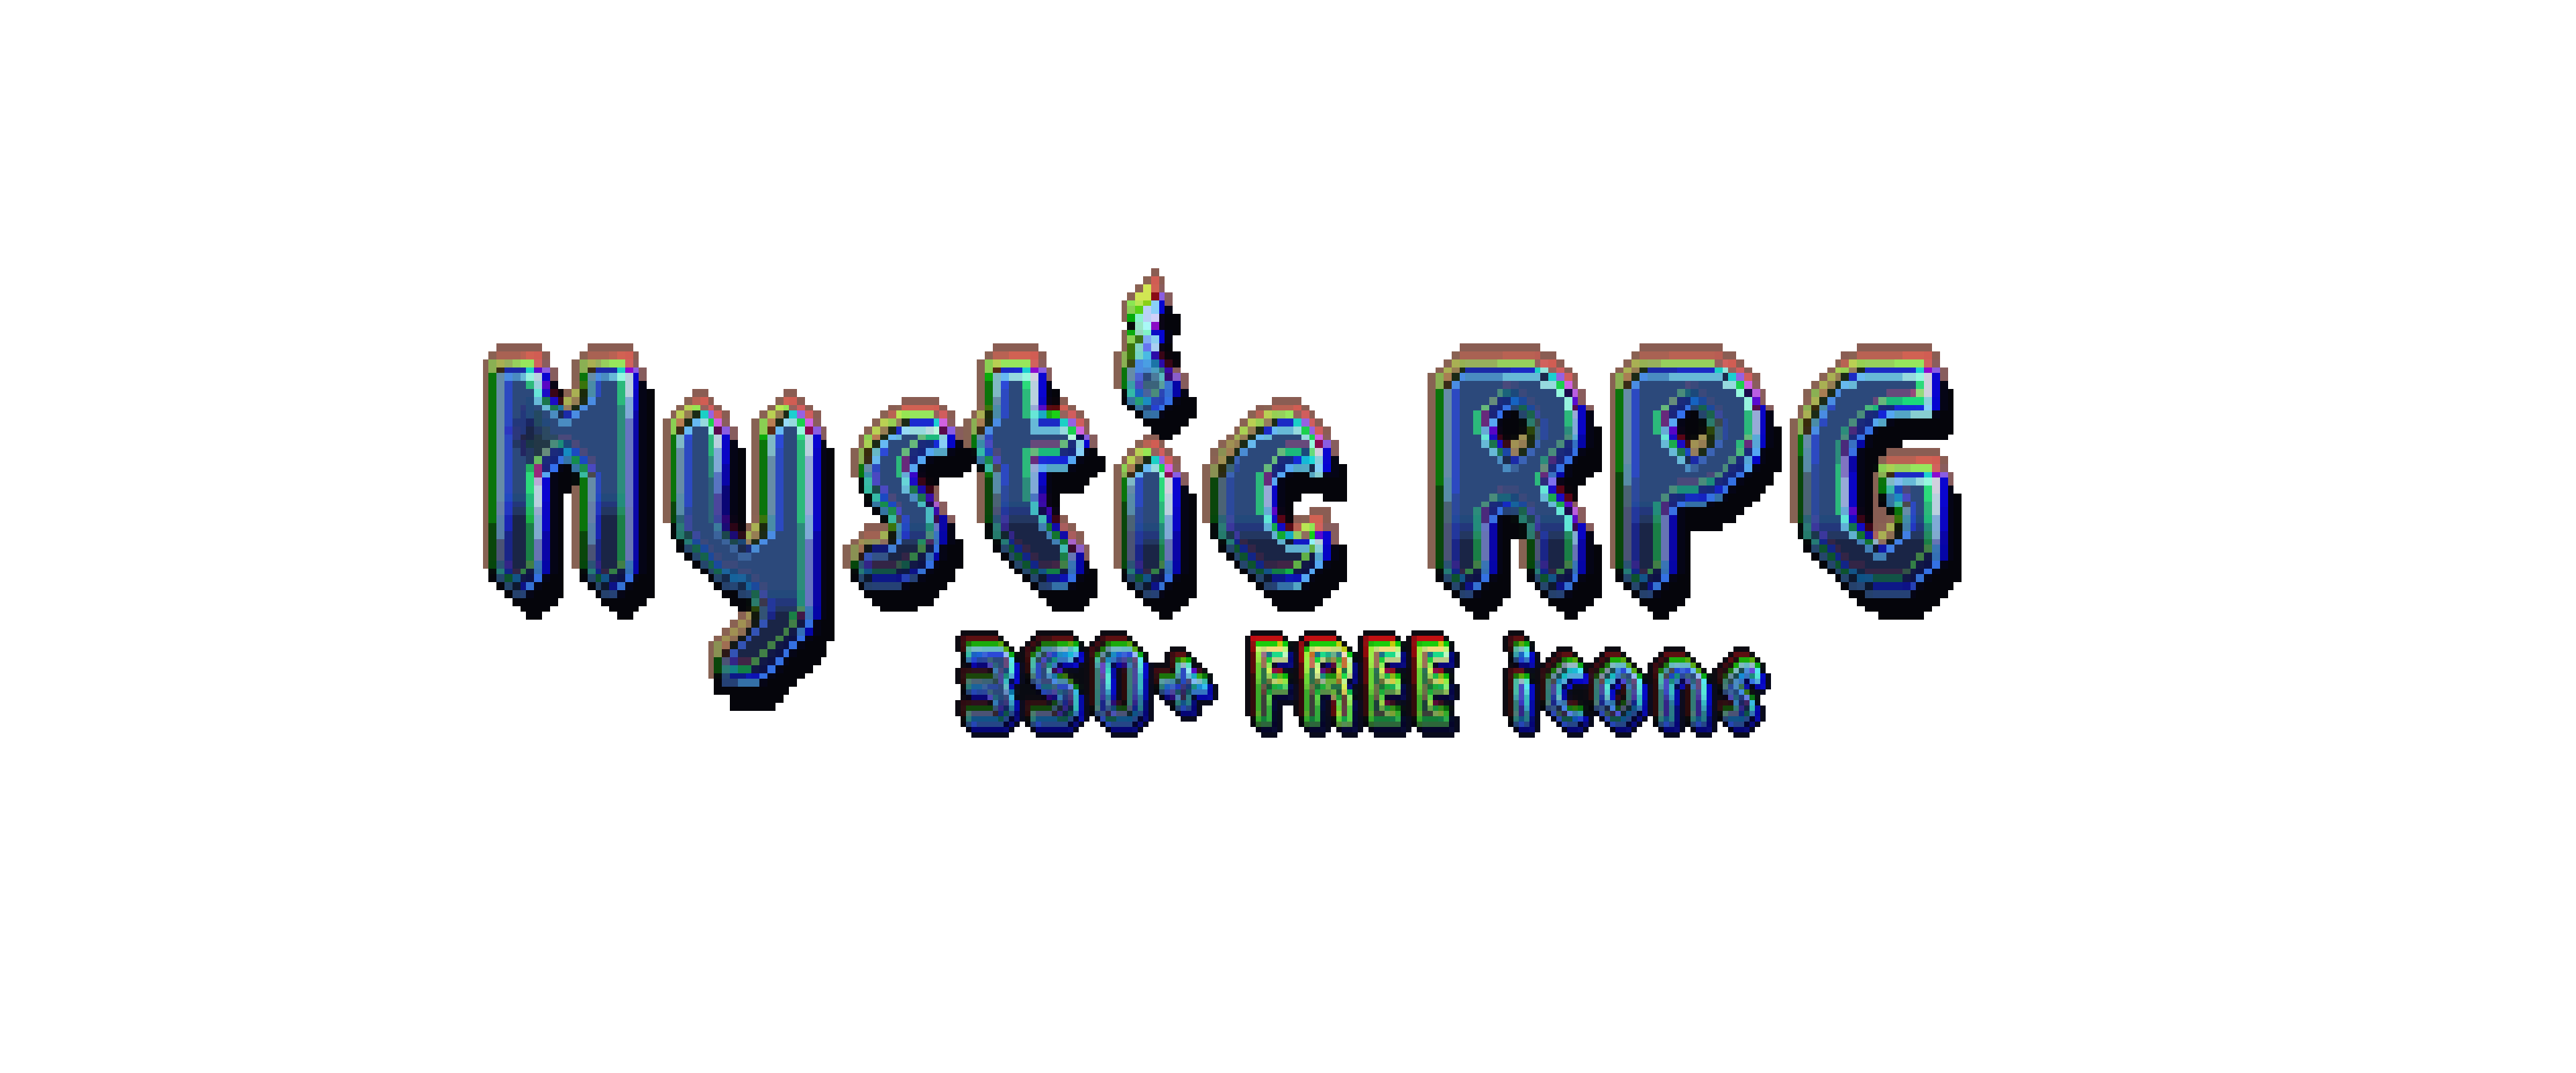 Mystic RPG icon pack